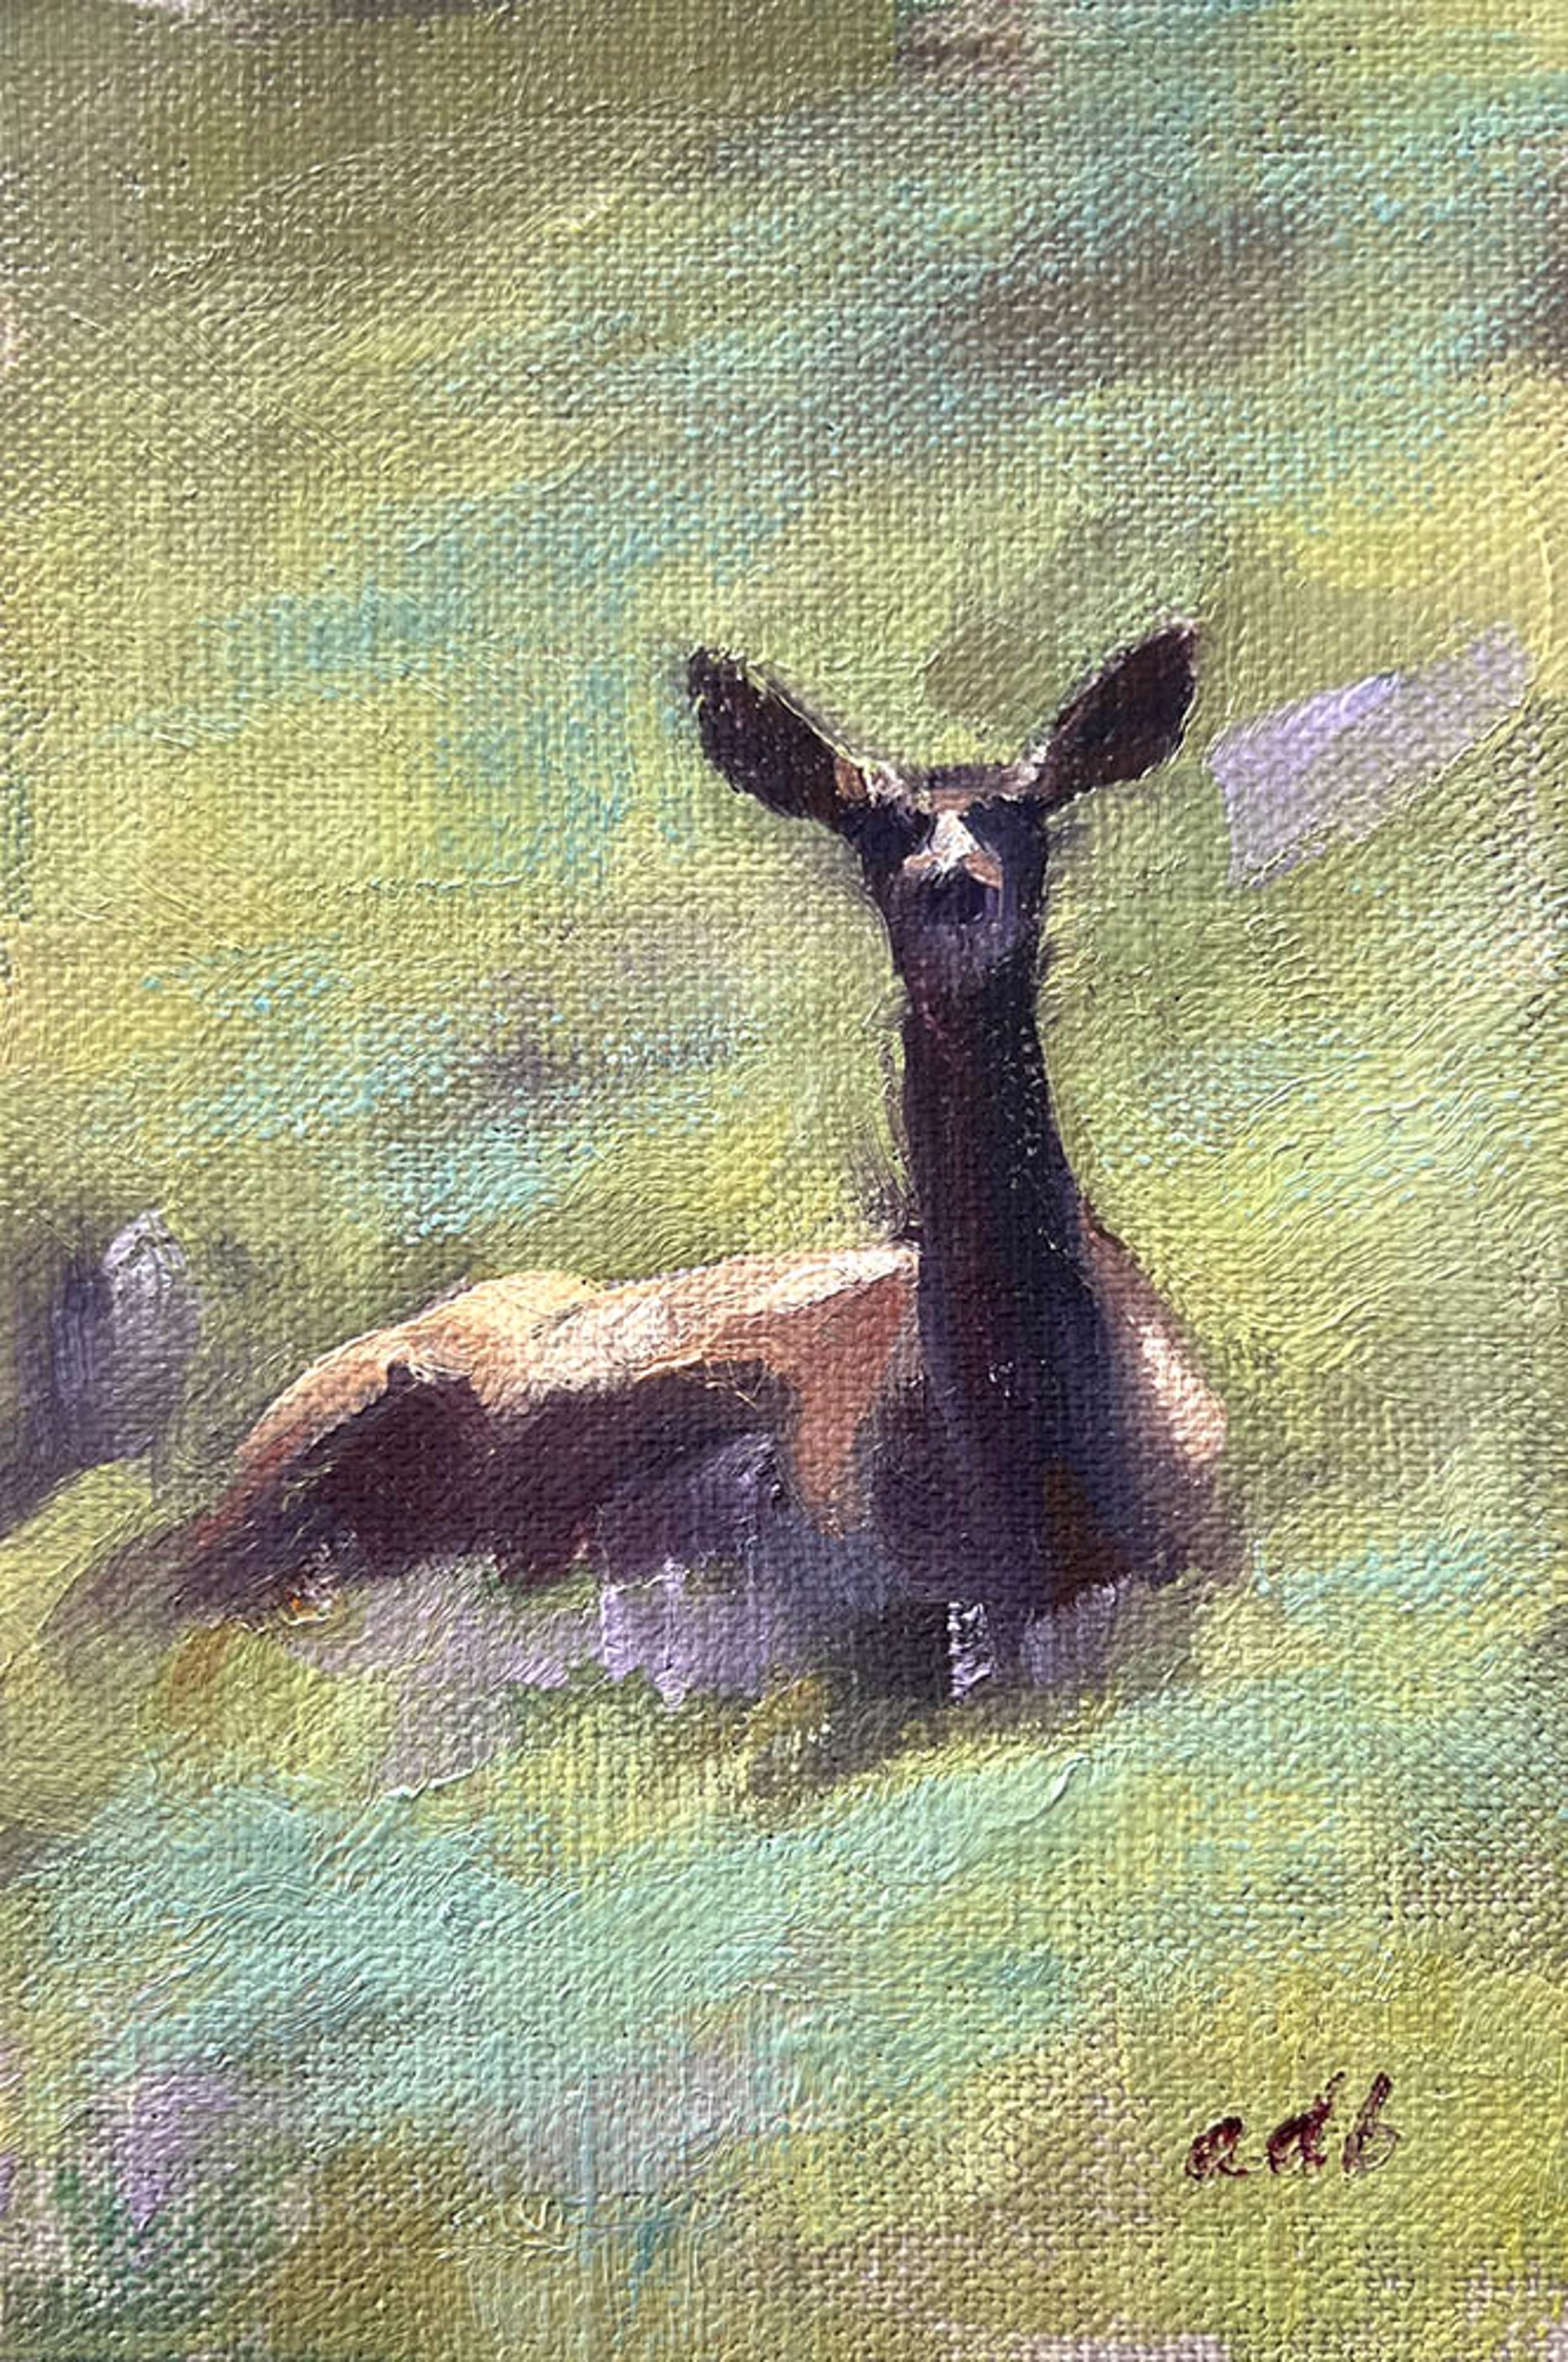 Deer Study by Amber Blazina